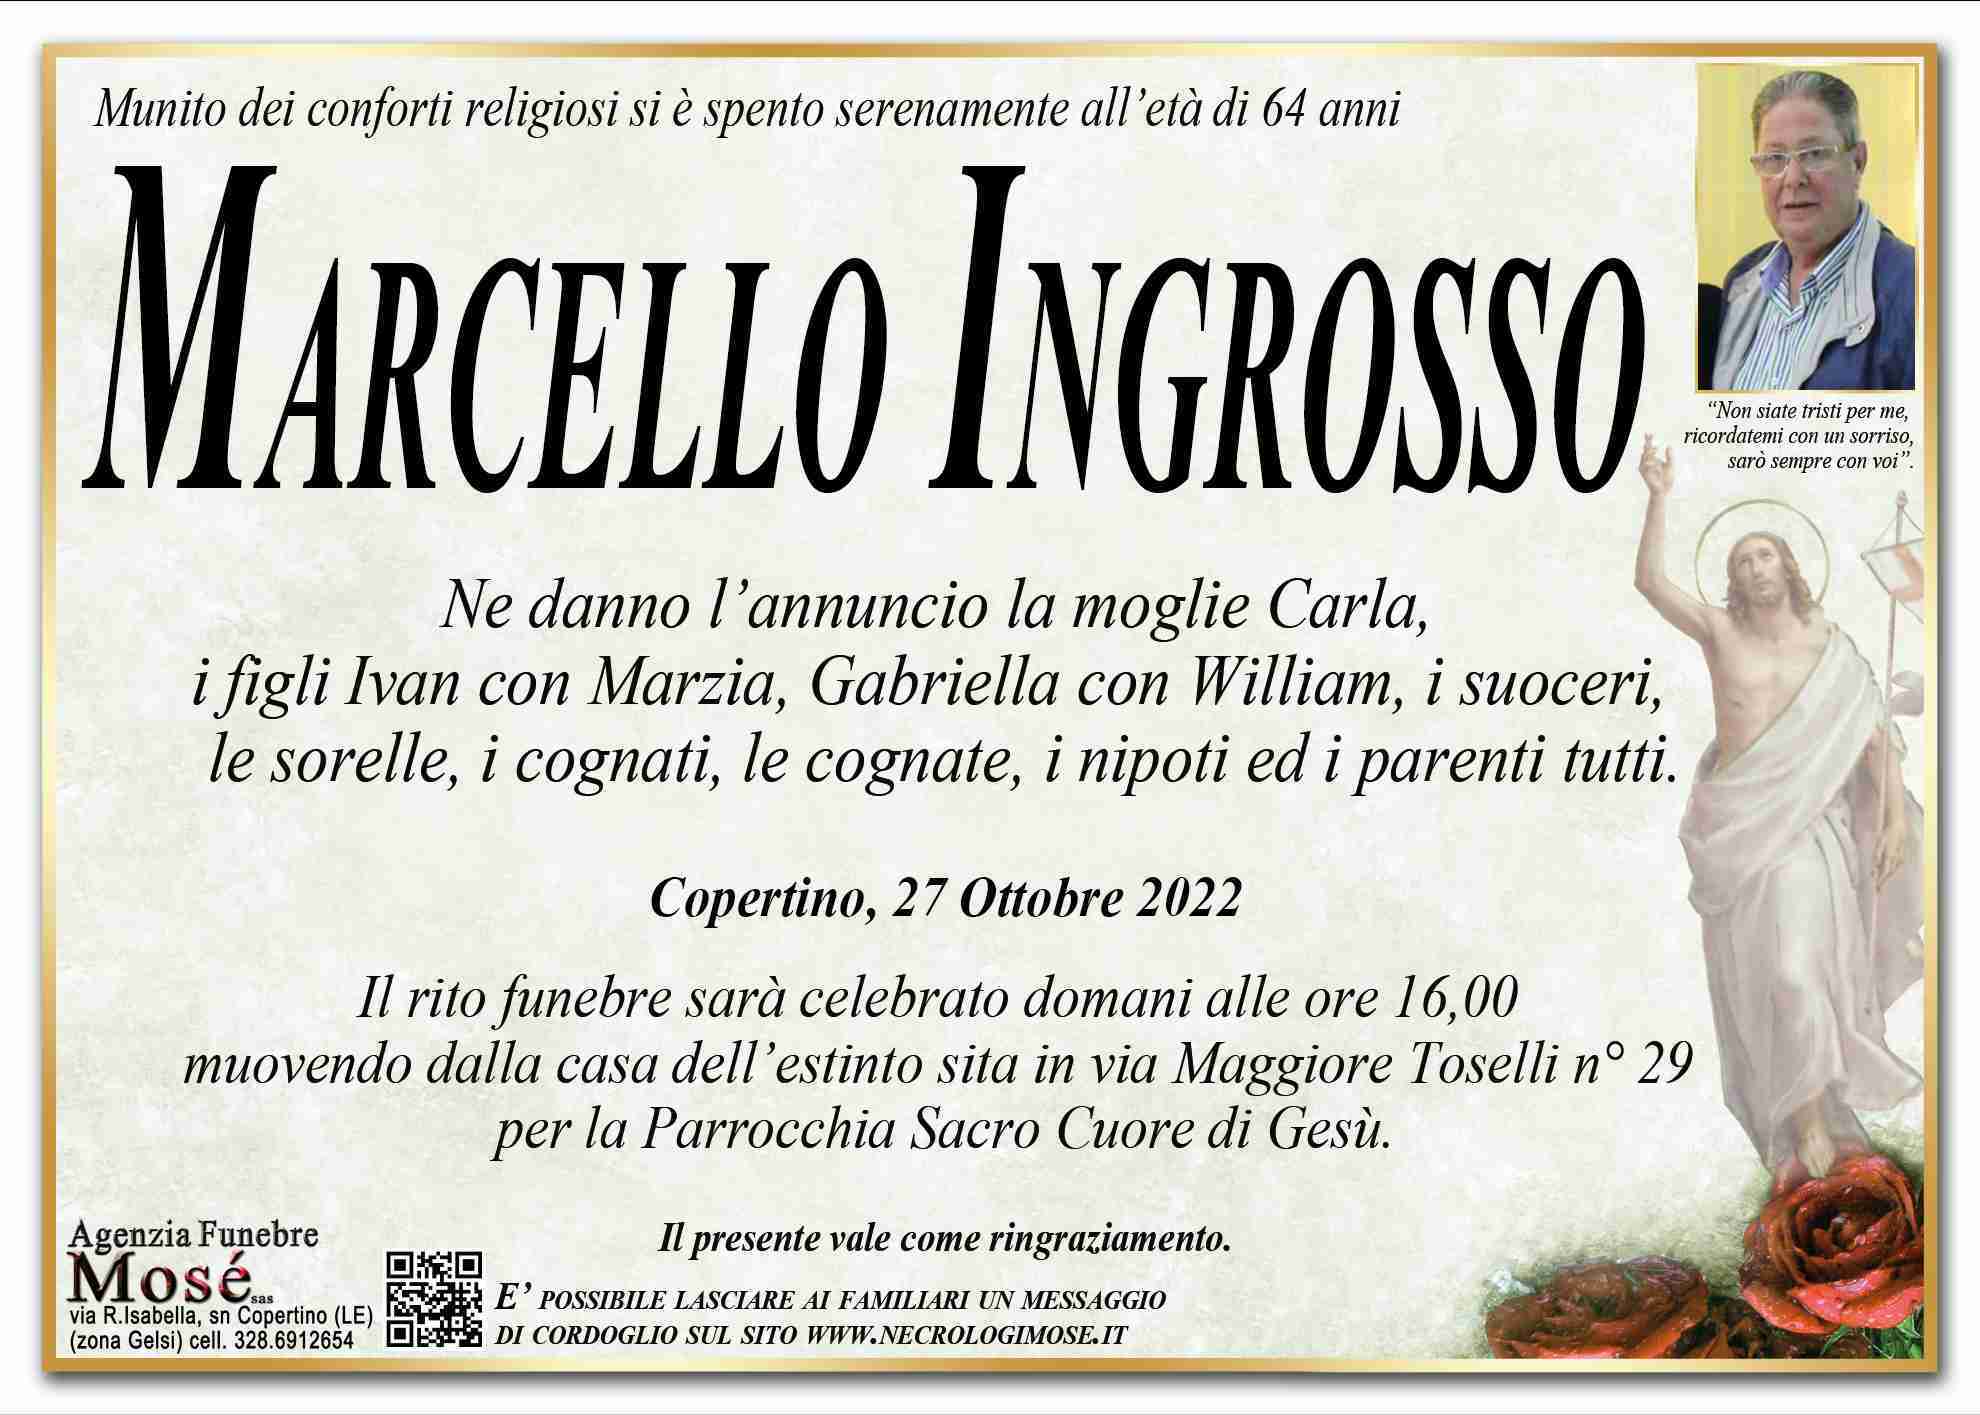 Marcello Ingrosso